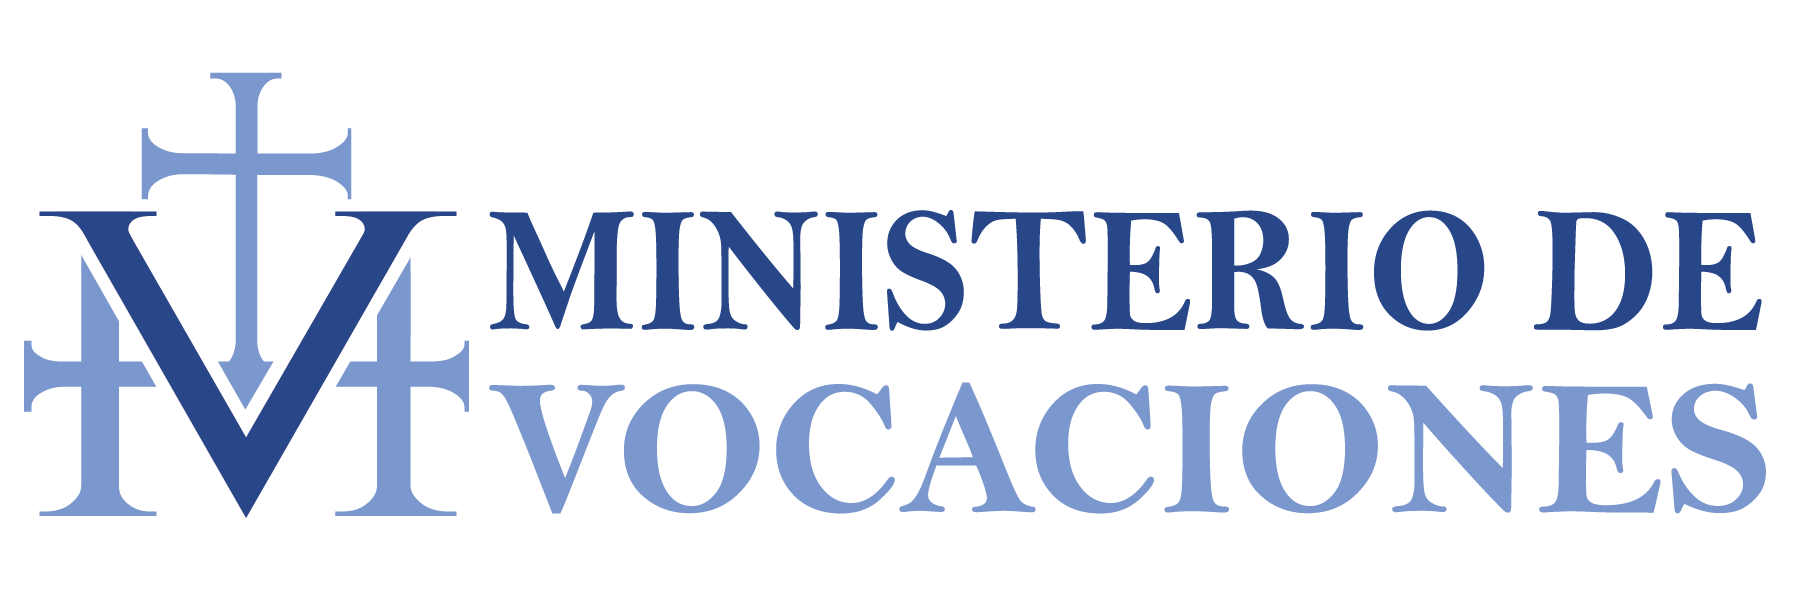 Vocation Ministry Logo.